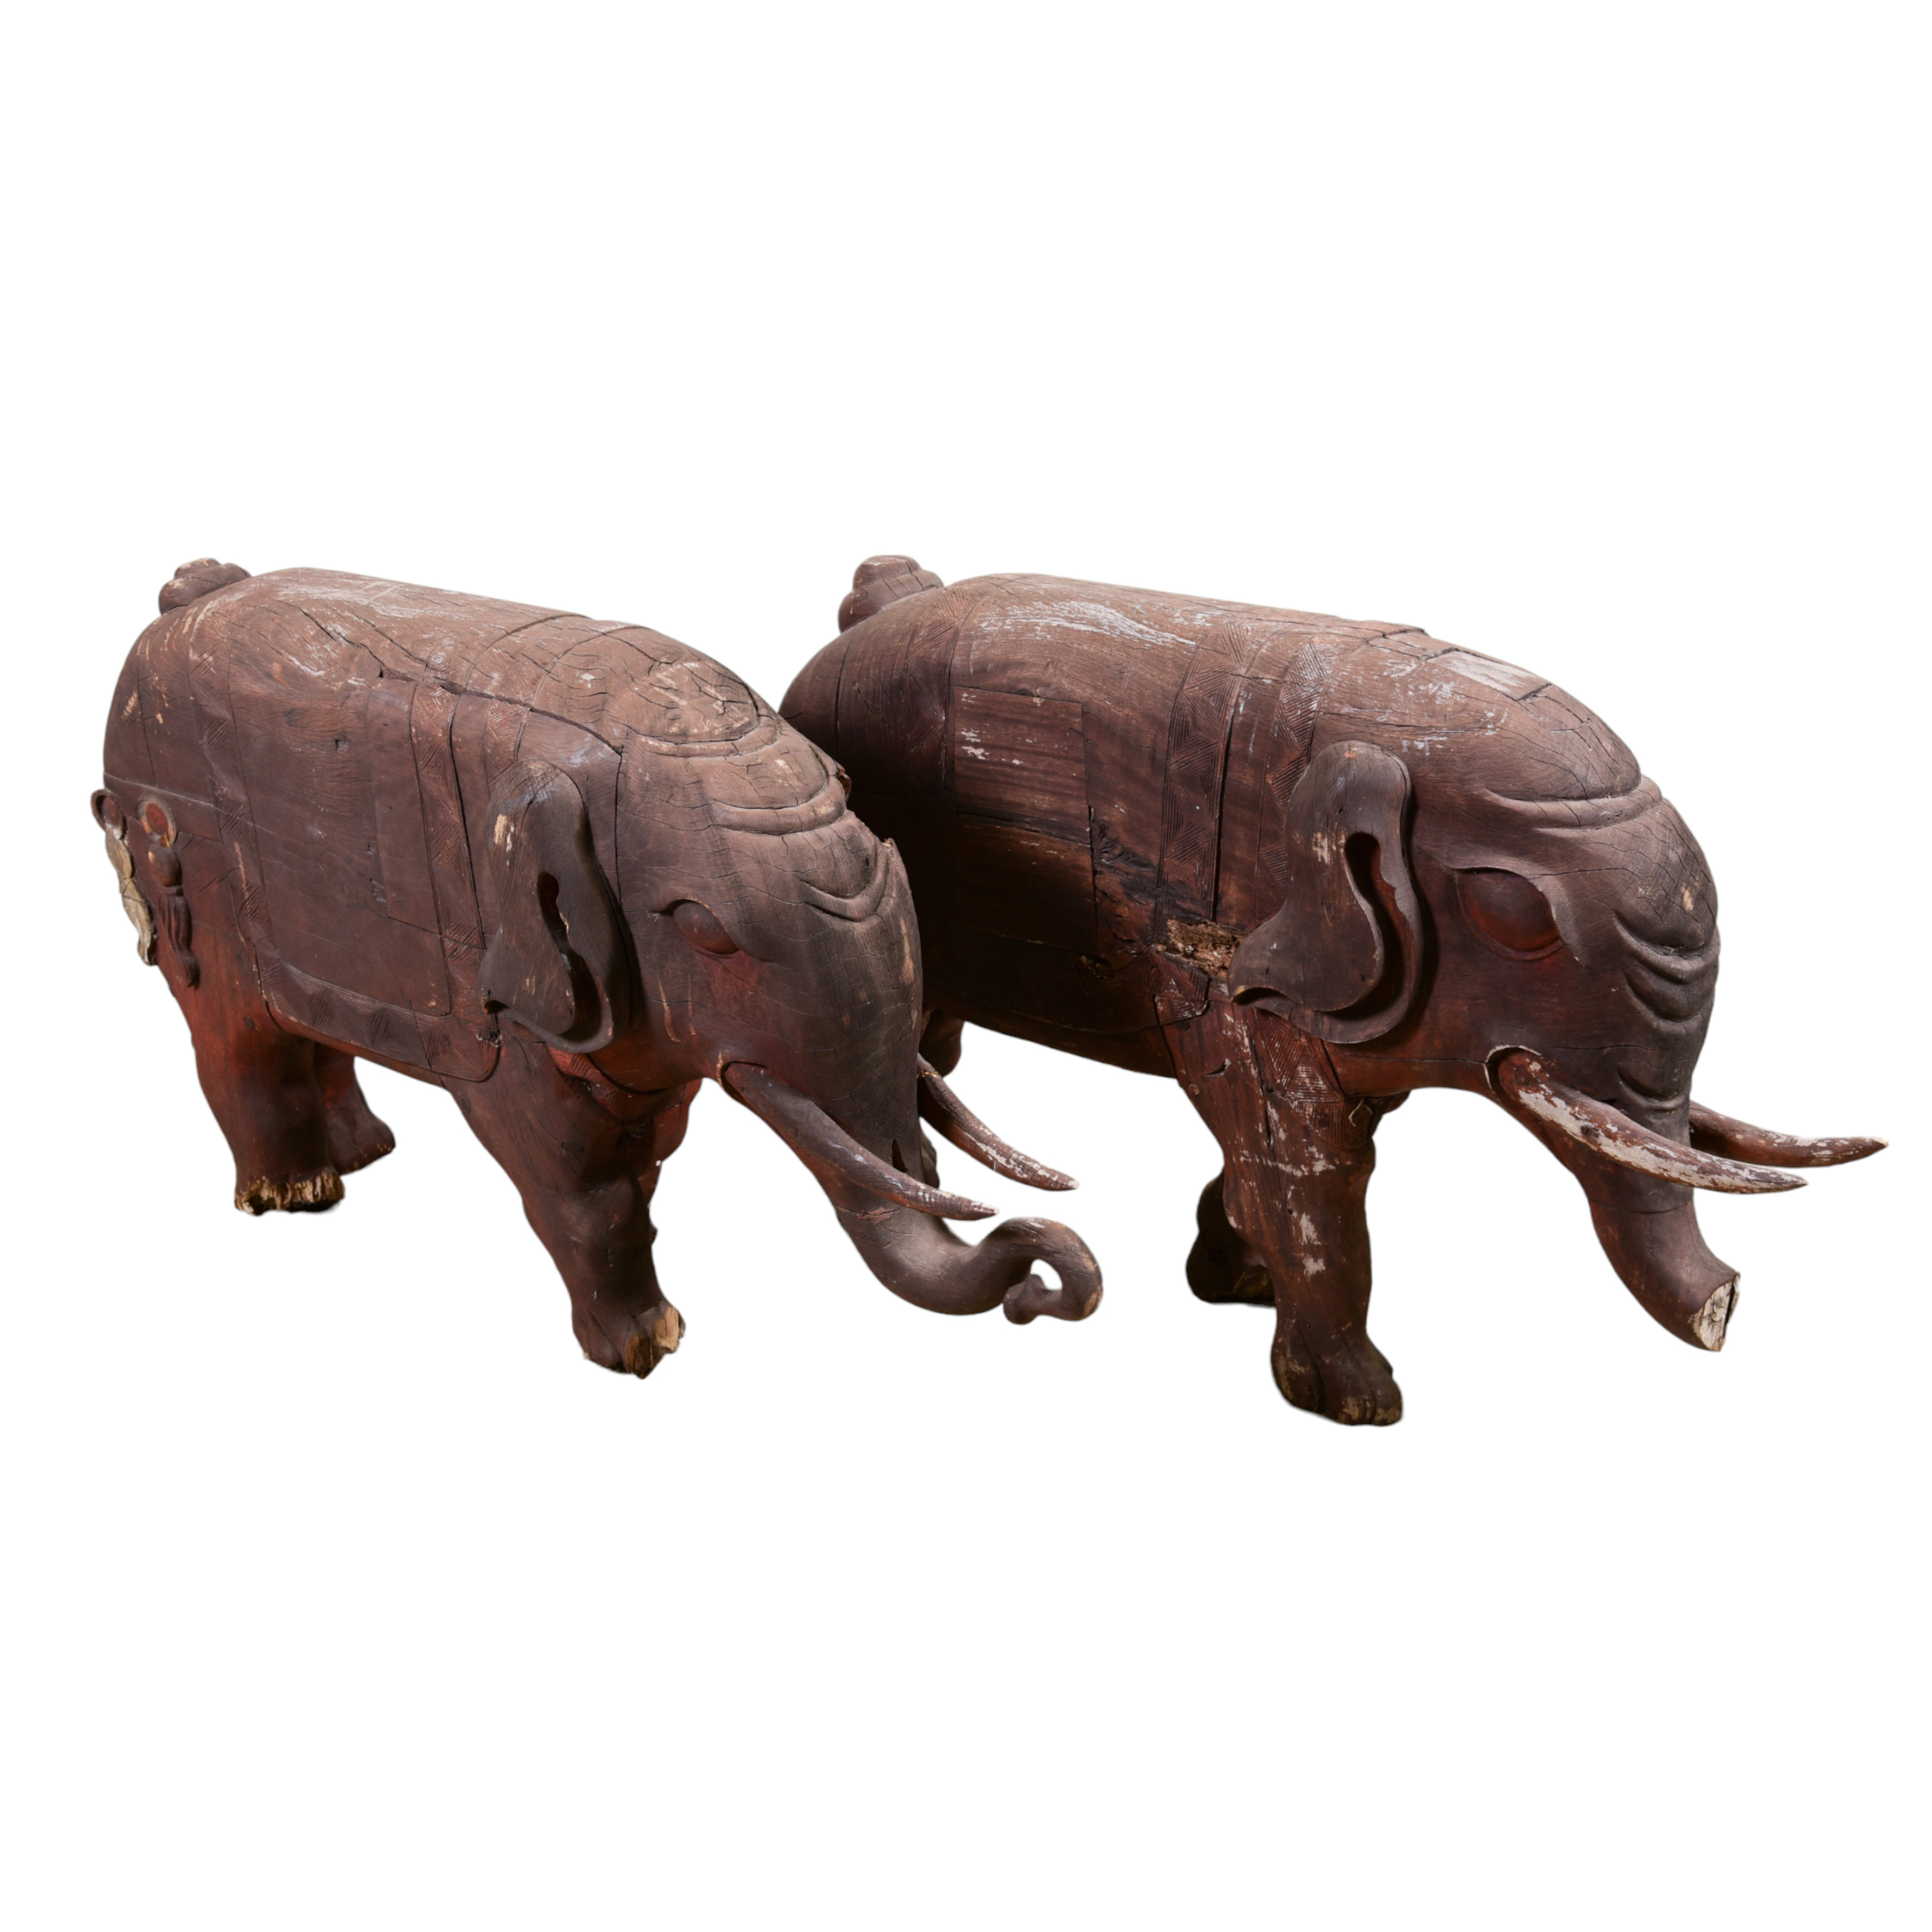 Pair carved wood elephants, according